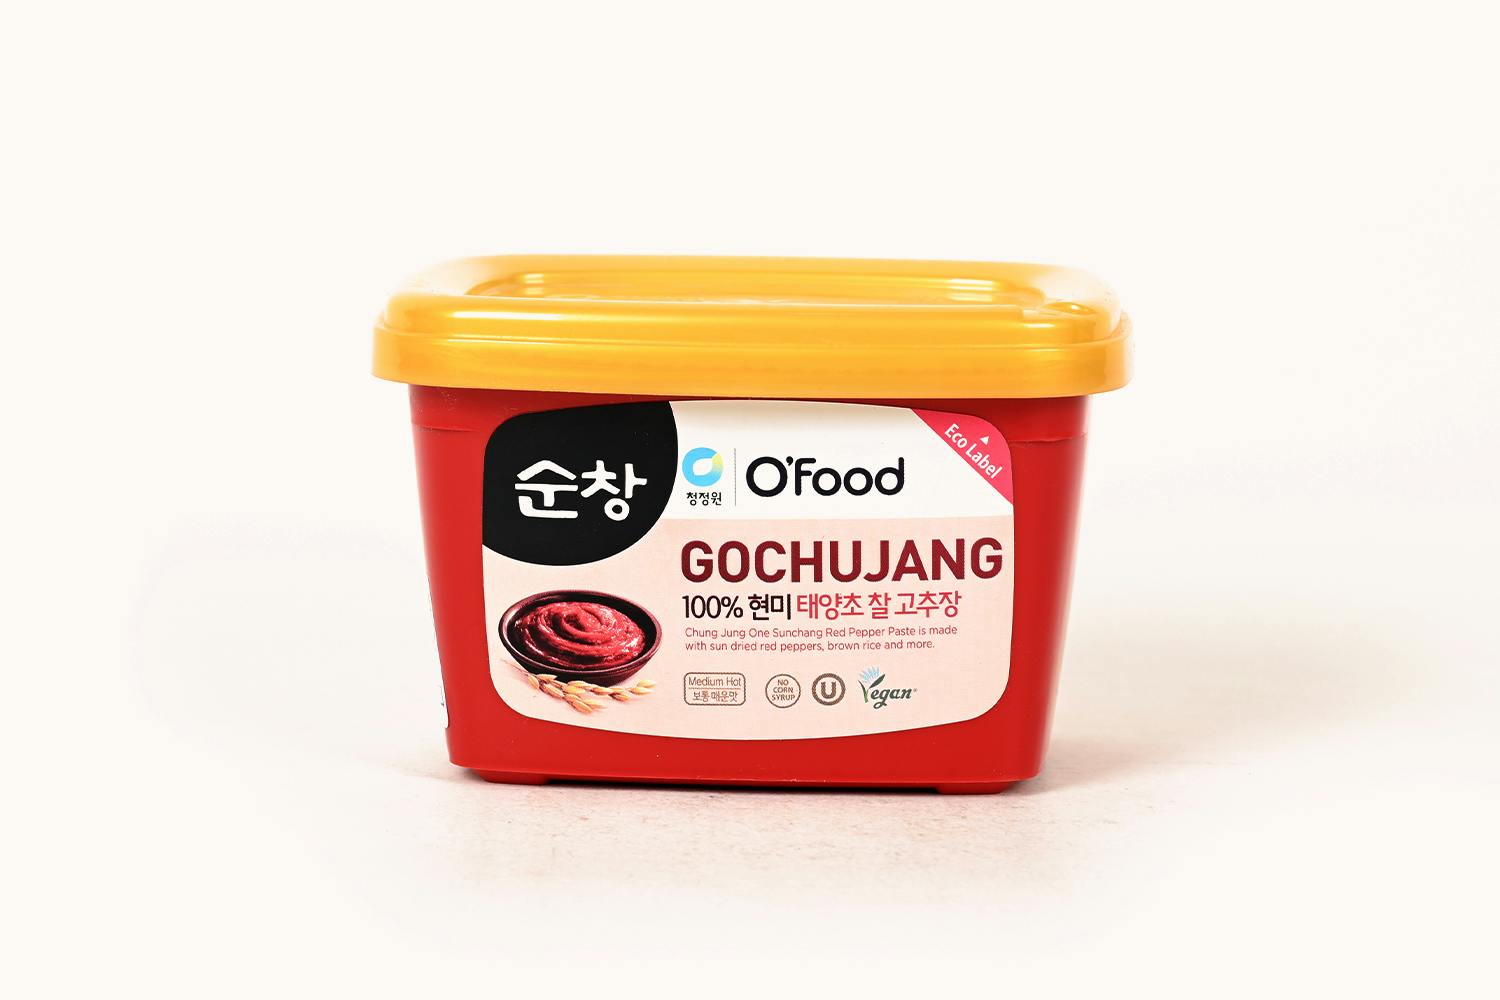 O'Food Gochujang Red Pepper Paste